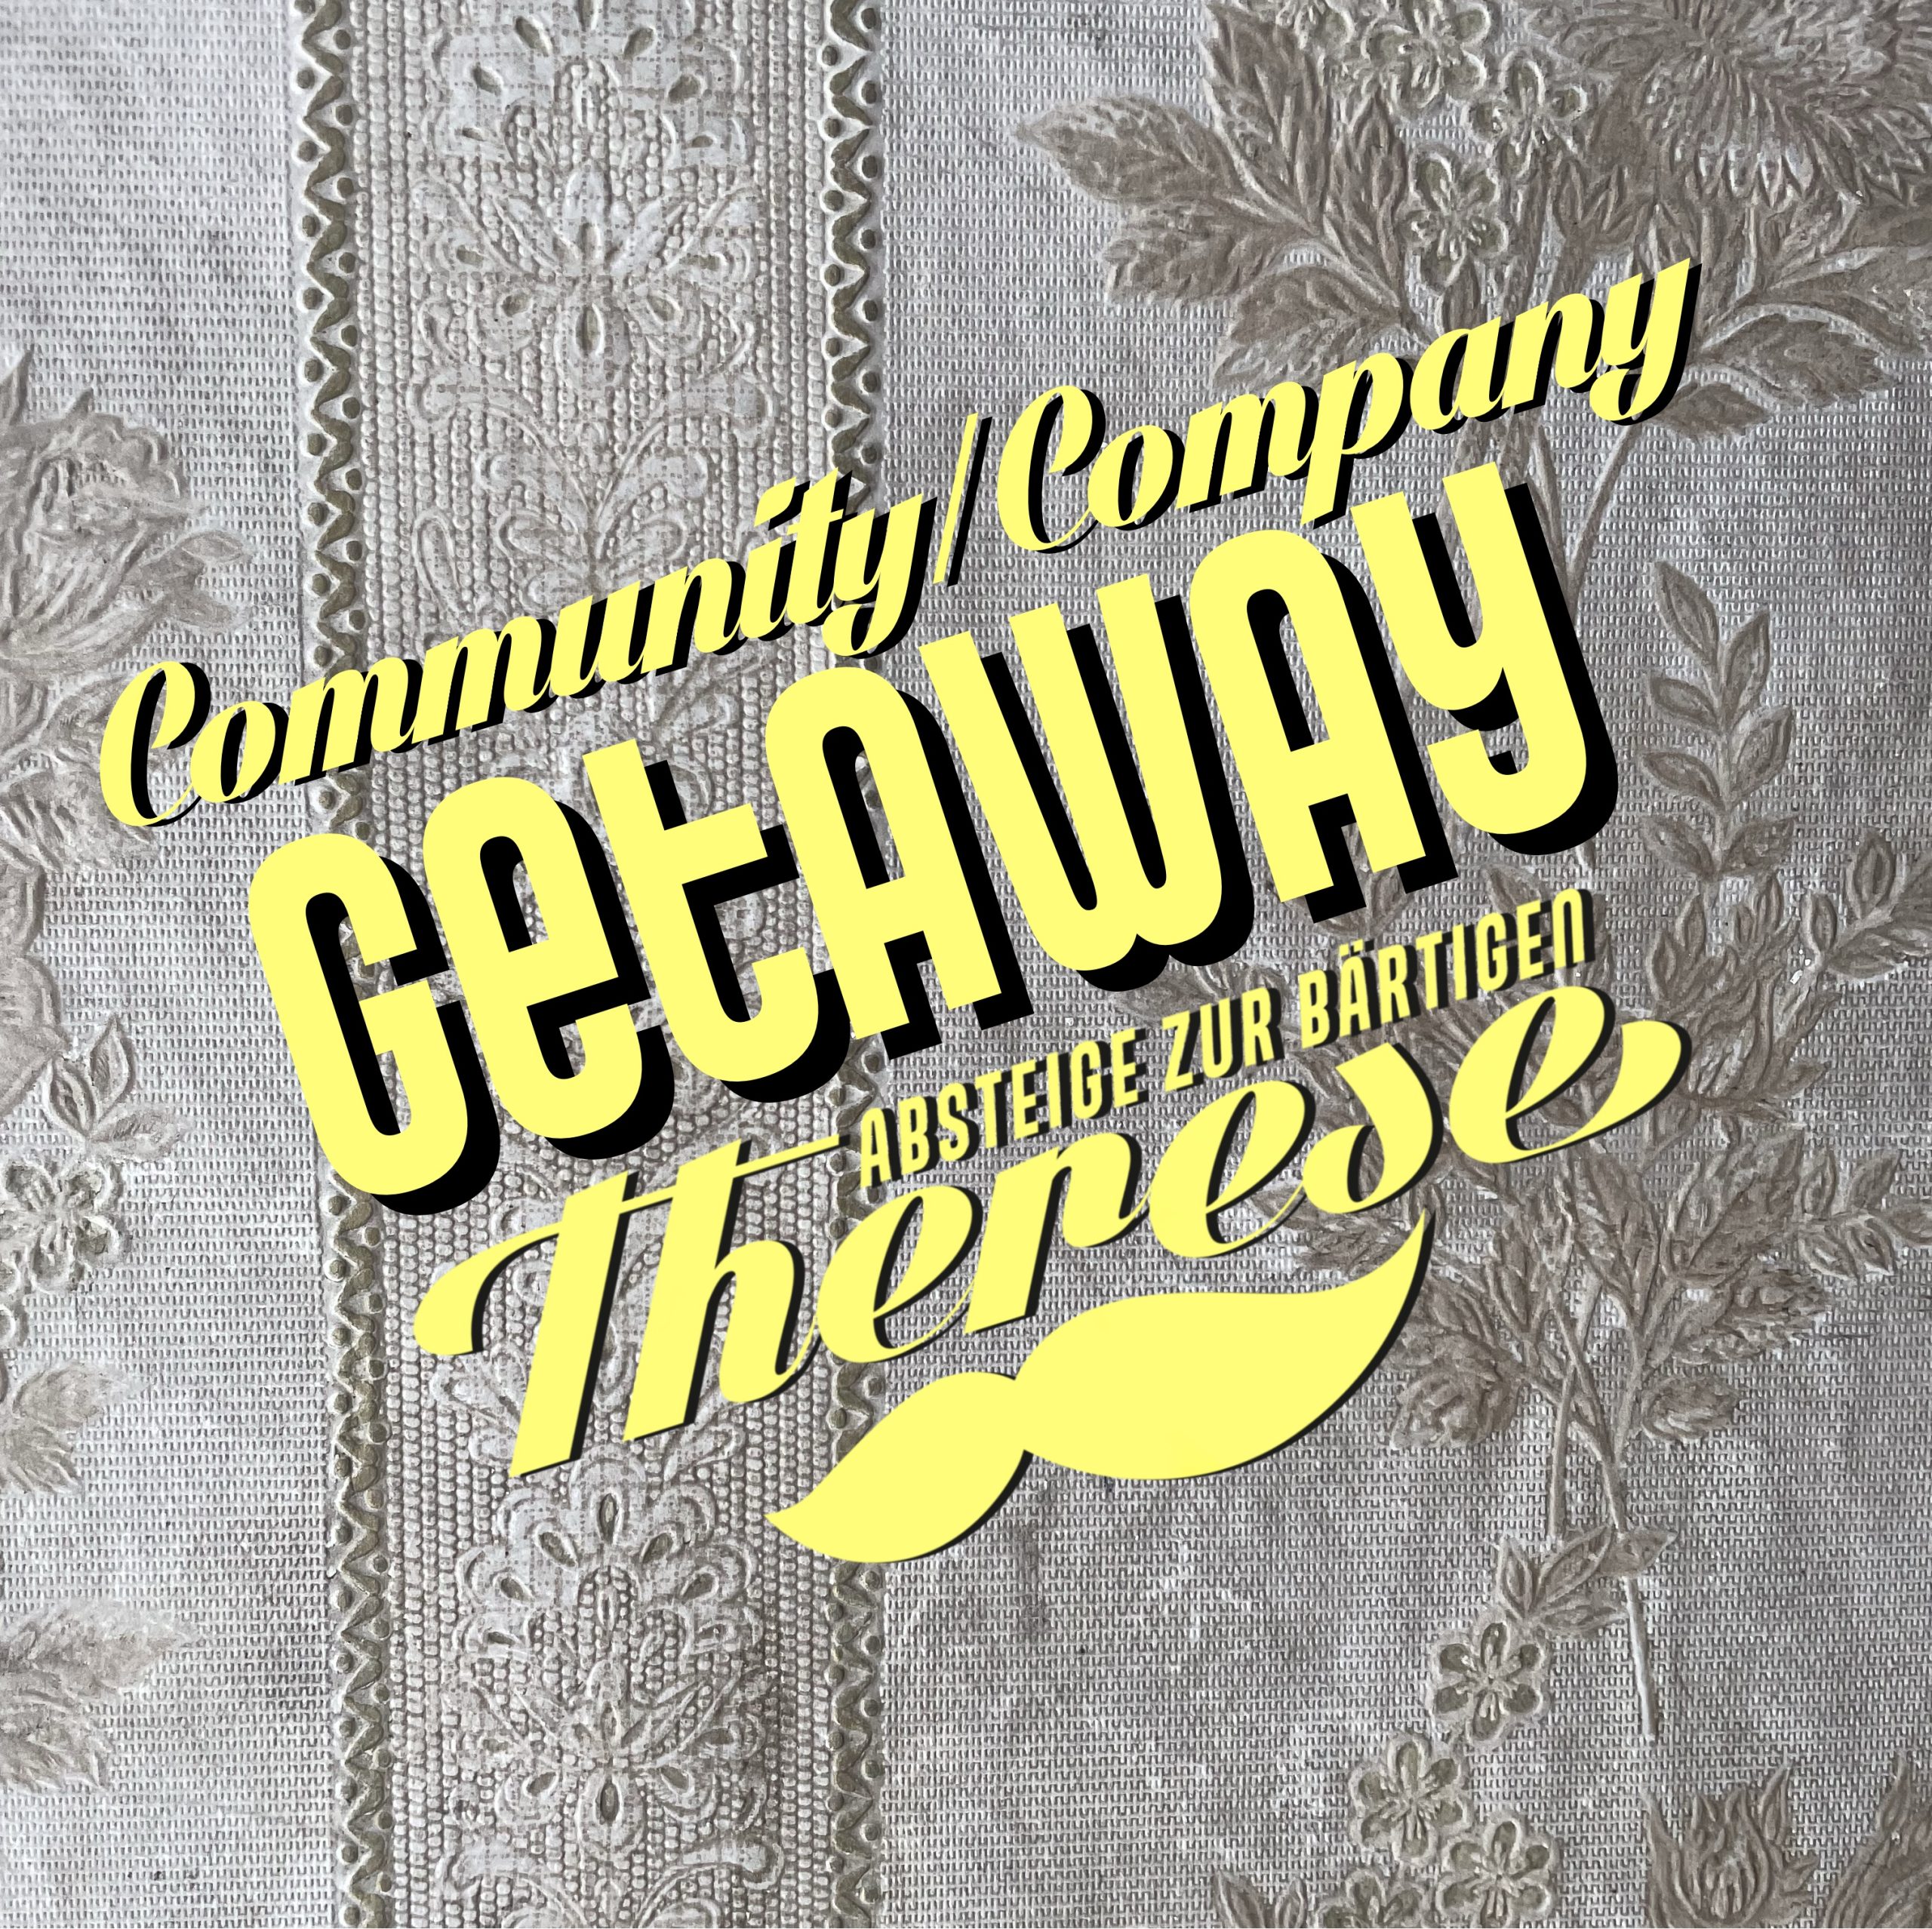 Community Getaway / Company Getaway I